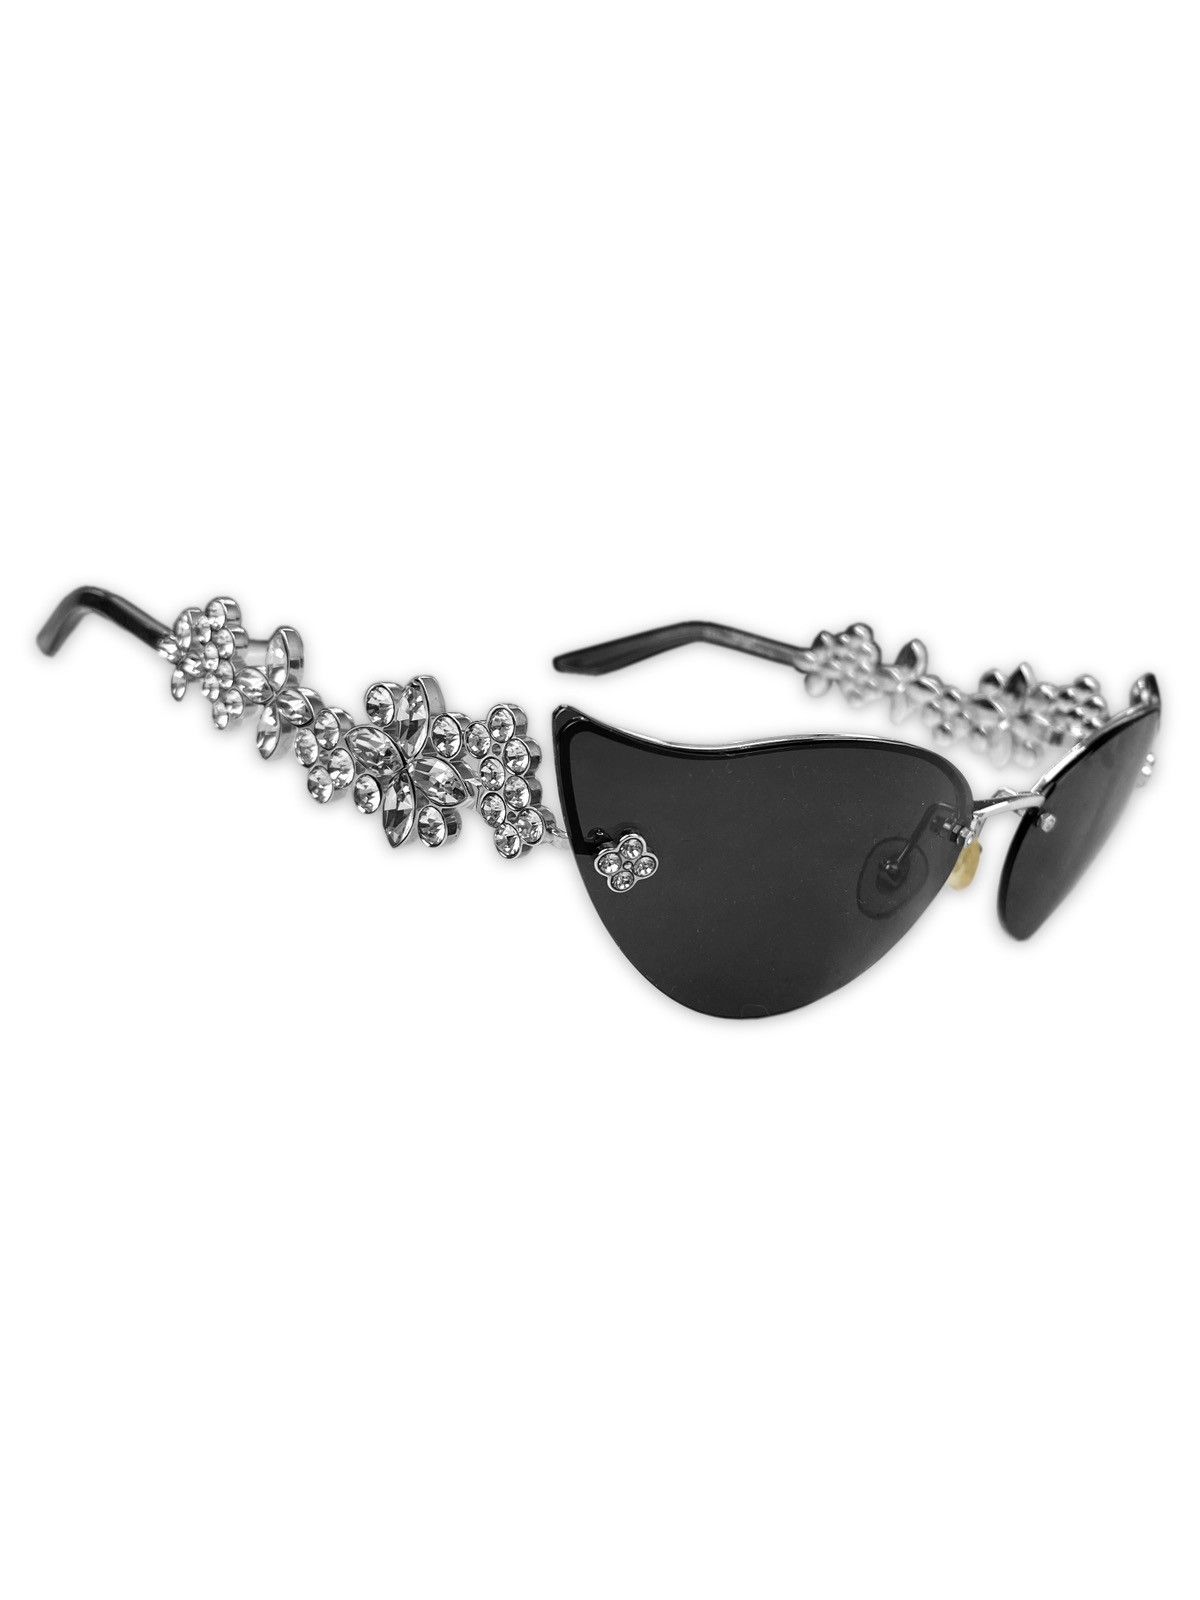 Louis Vuitton Sunglasses Cat Eyes Limited Edition Swarovski Crystal BEYONCÉ  RARE